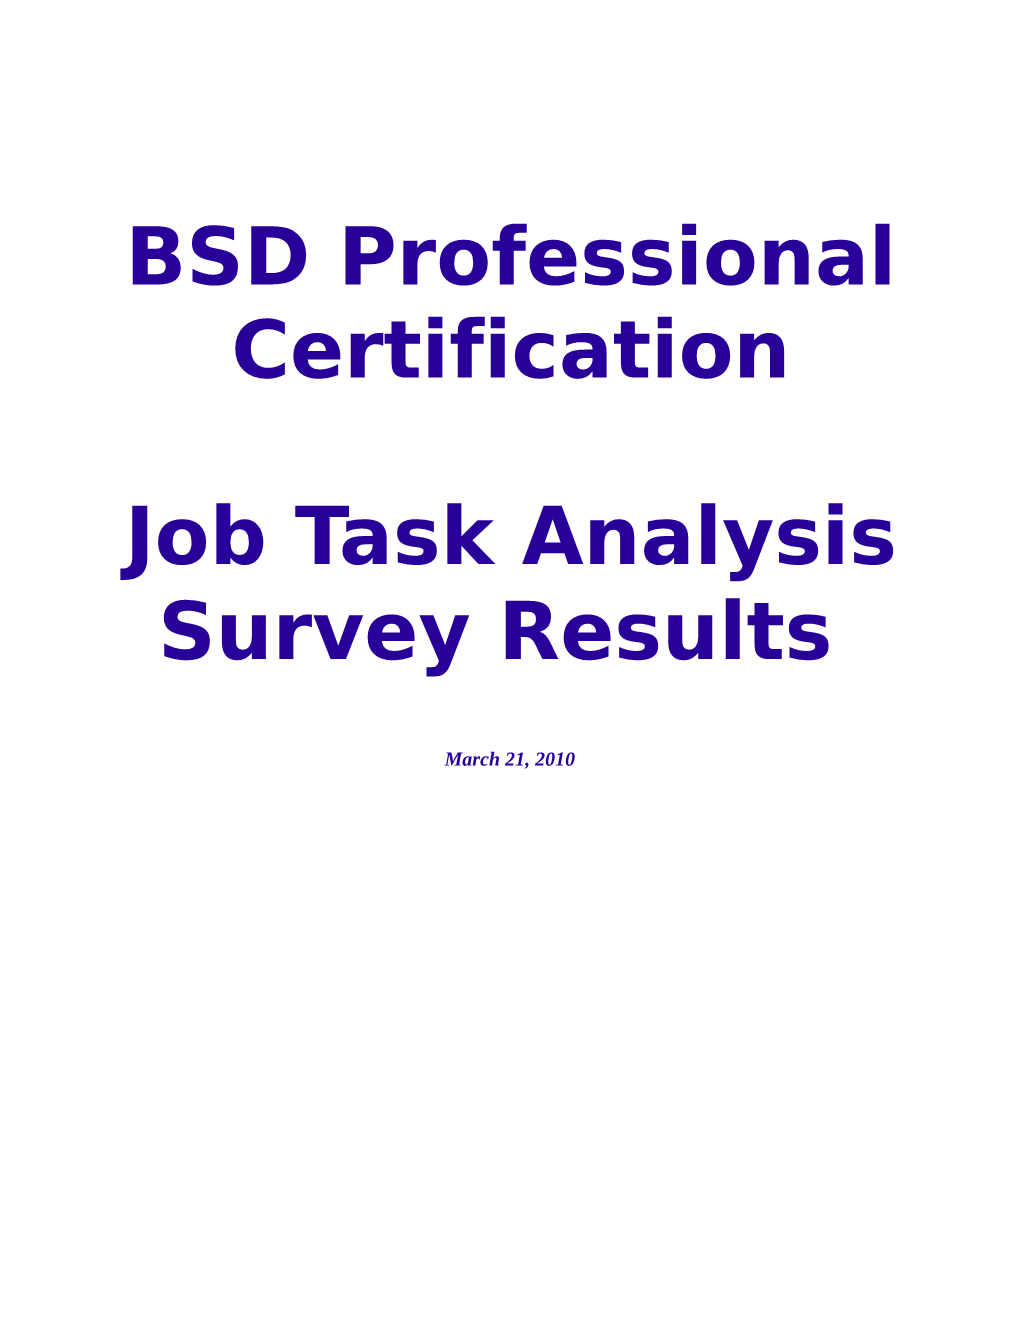 BSD Professional Certification Job Task Analysis Survey Results